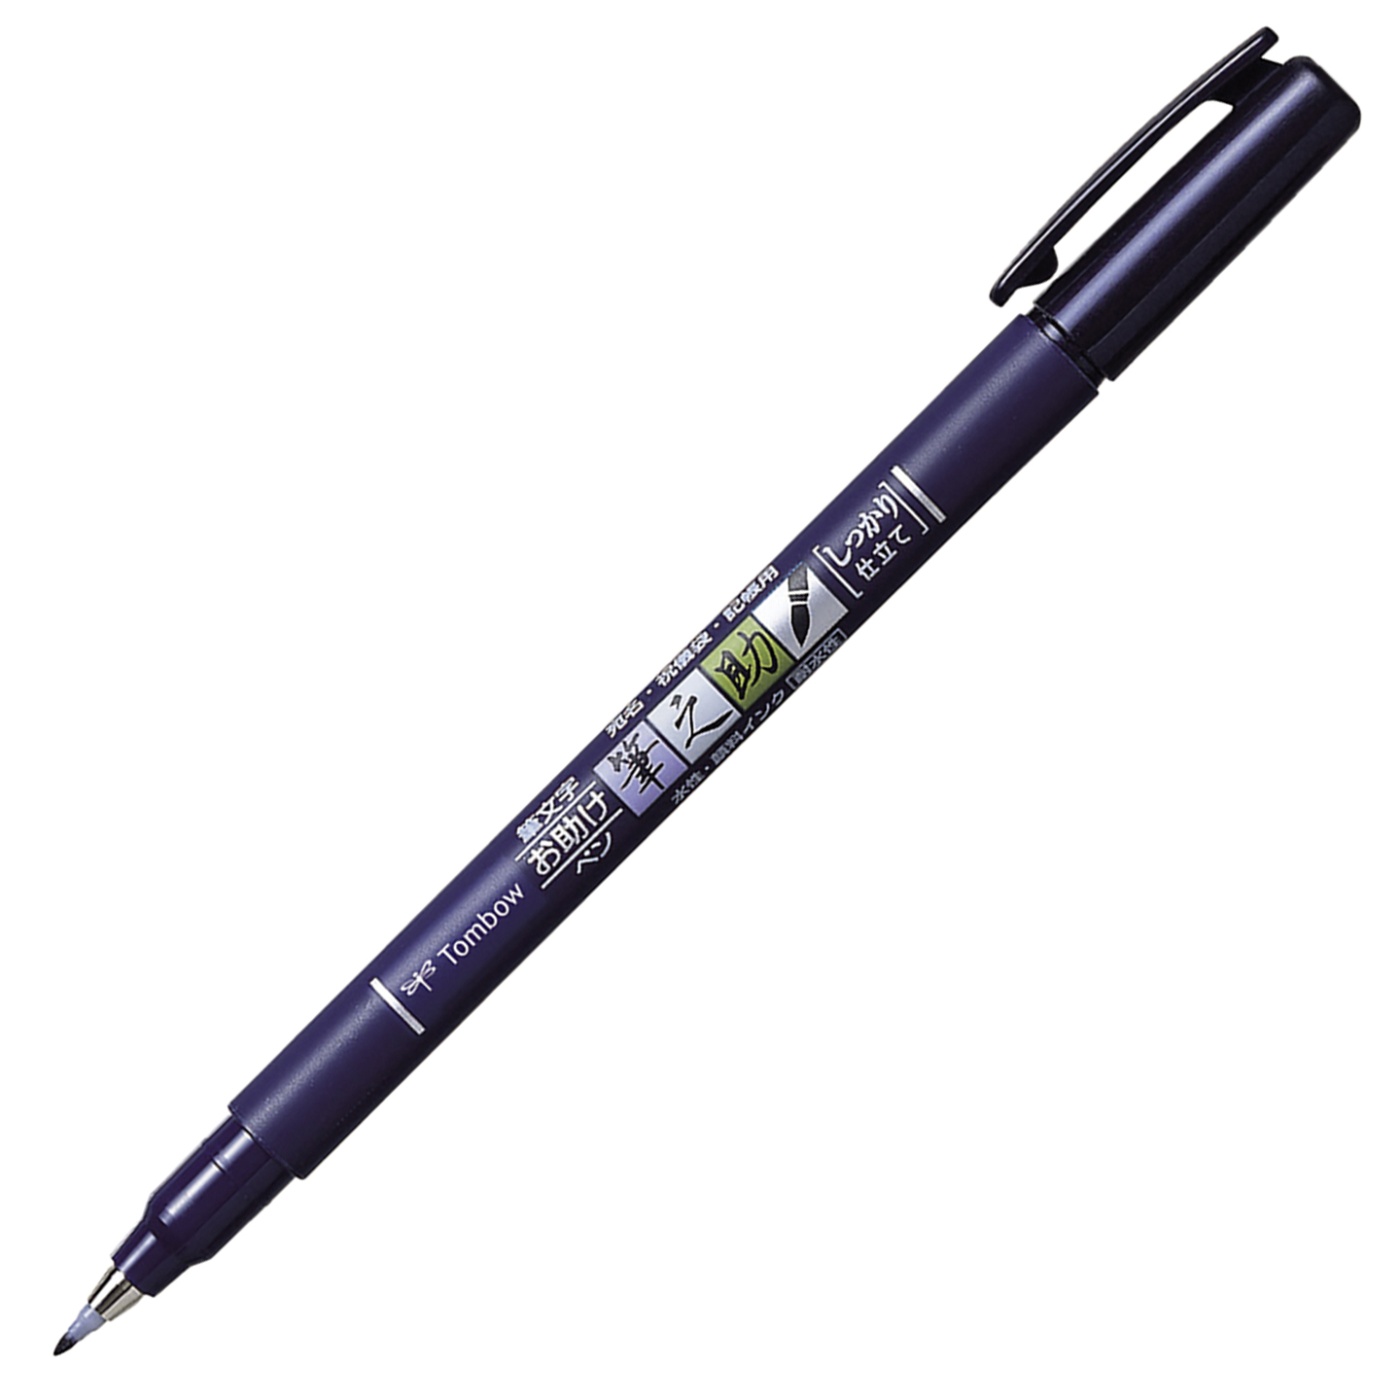 Genuine Tombow Fudenosuke Brush Pen Hard Tip Arts Craft Pack of 10 Pens 